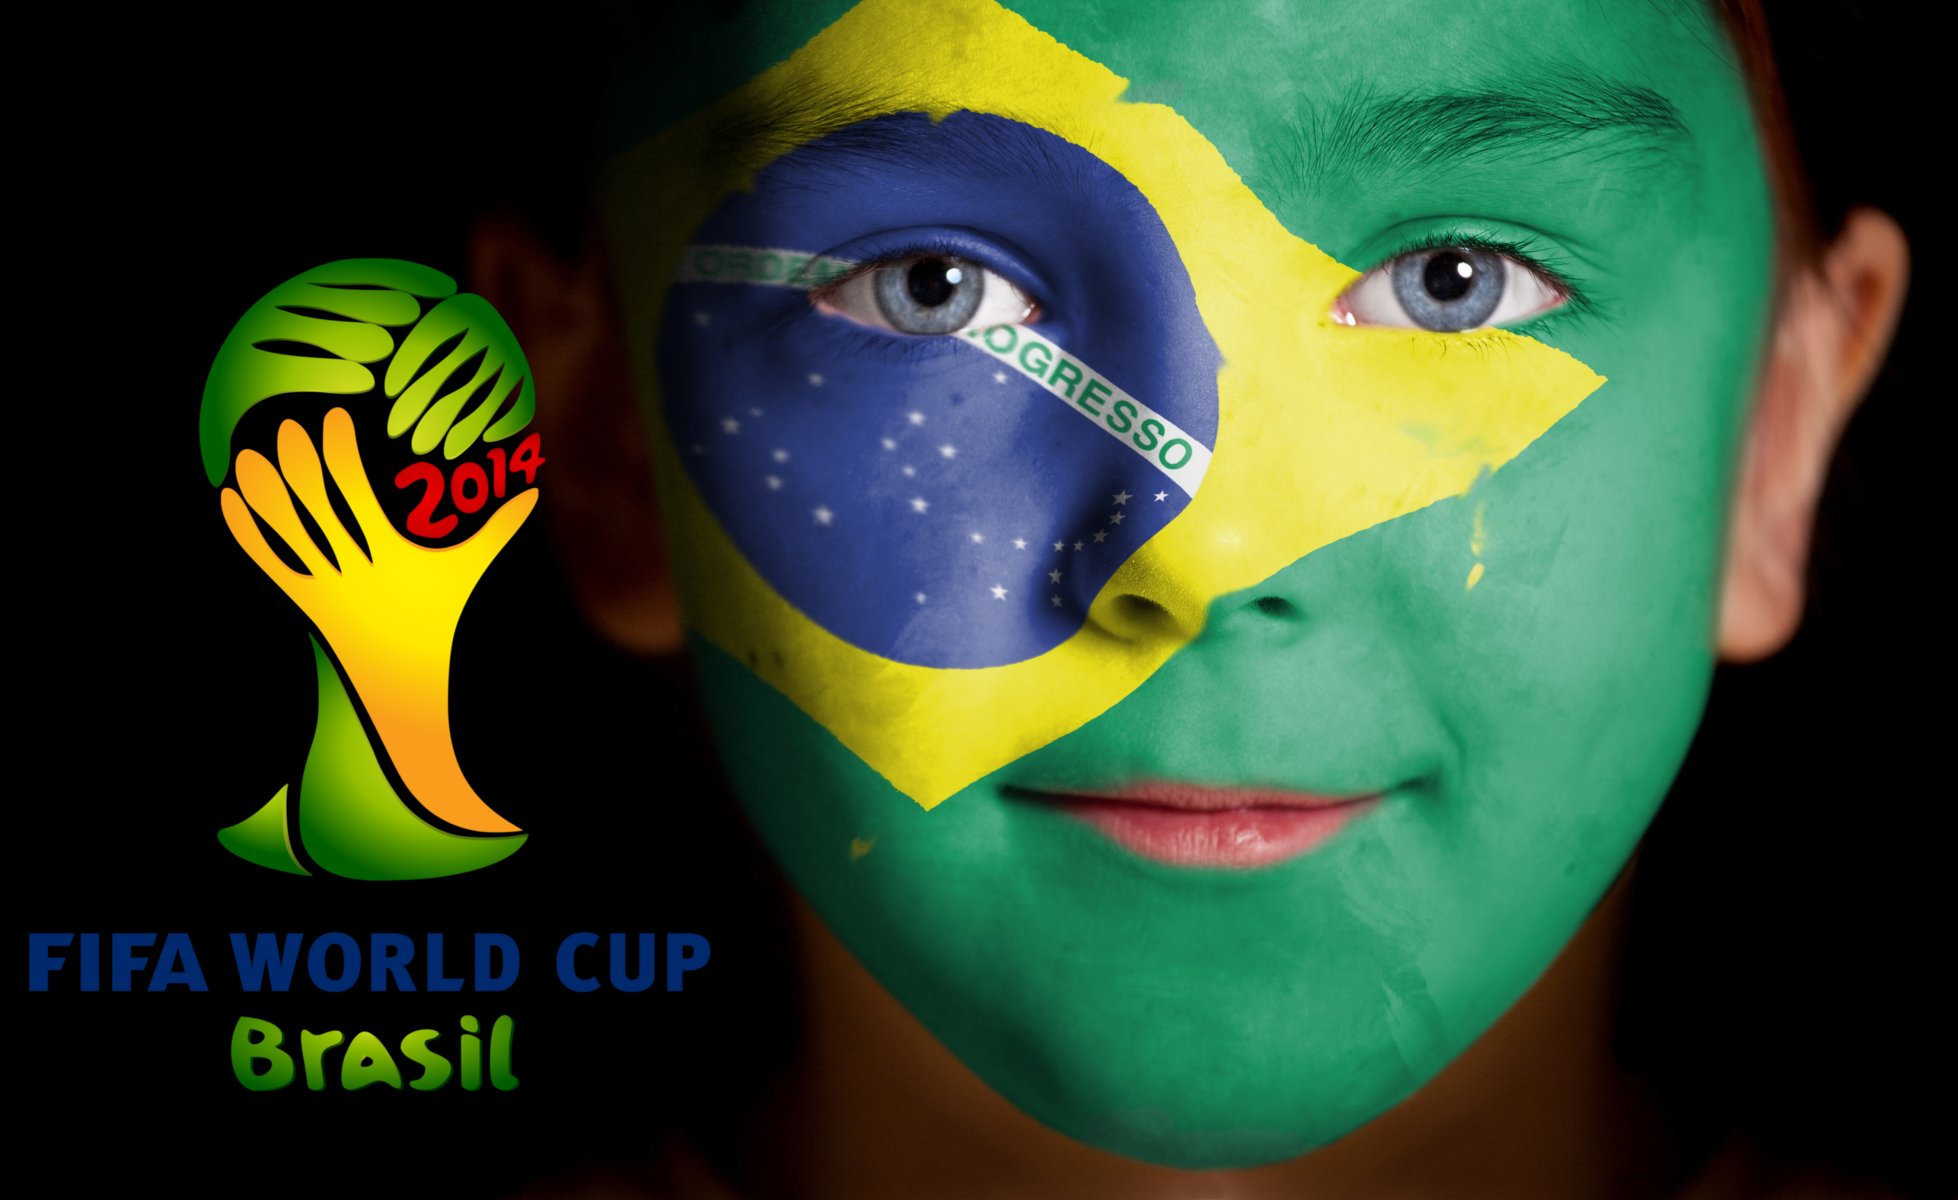 бразилия fifa кубок мира 2014 футбол флаг лицо